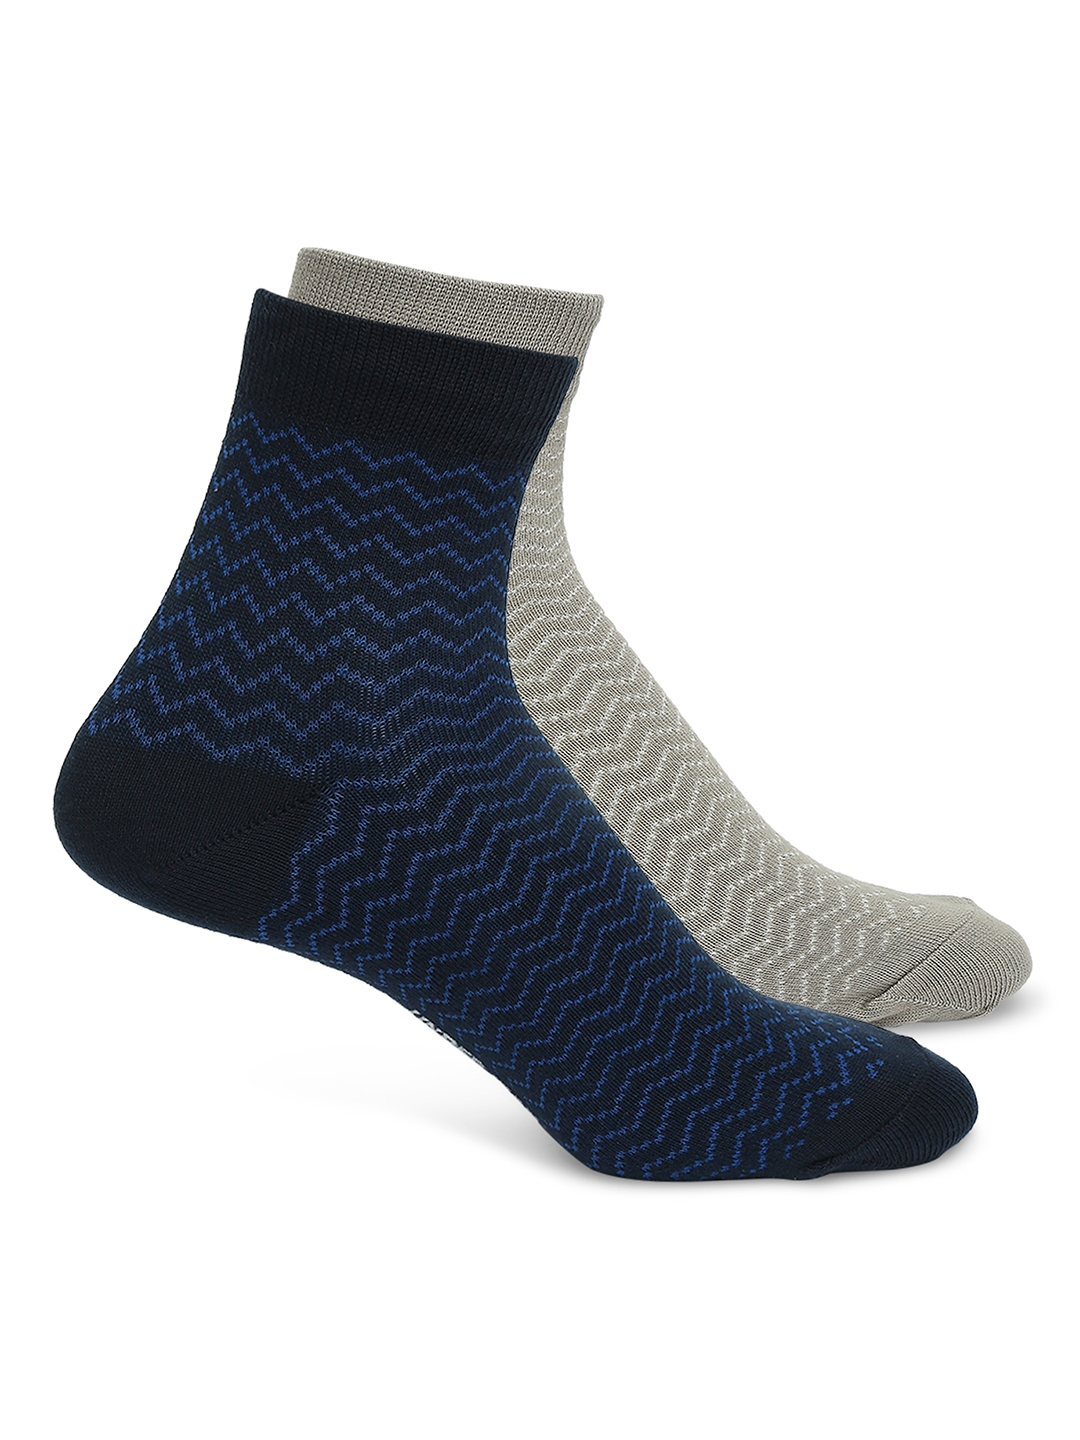 spykar | Underjeans by Spykar Premium Navy & Khaki Ankle Length Socks - Pack Of 2